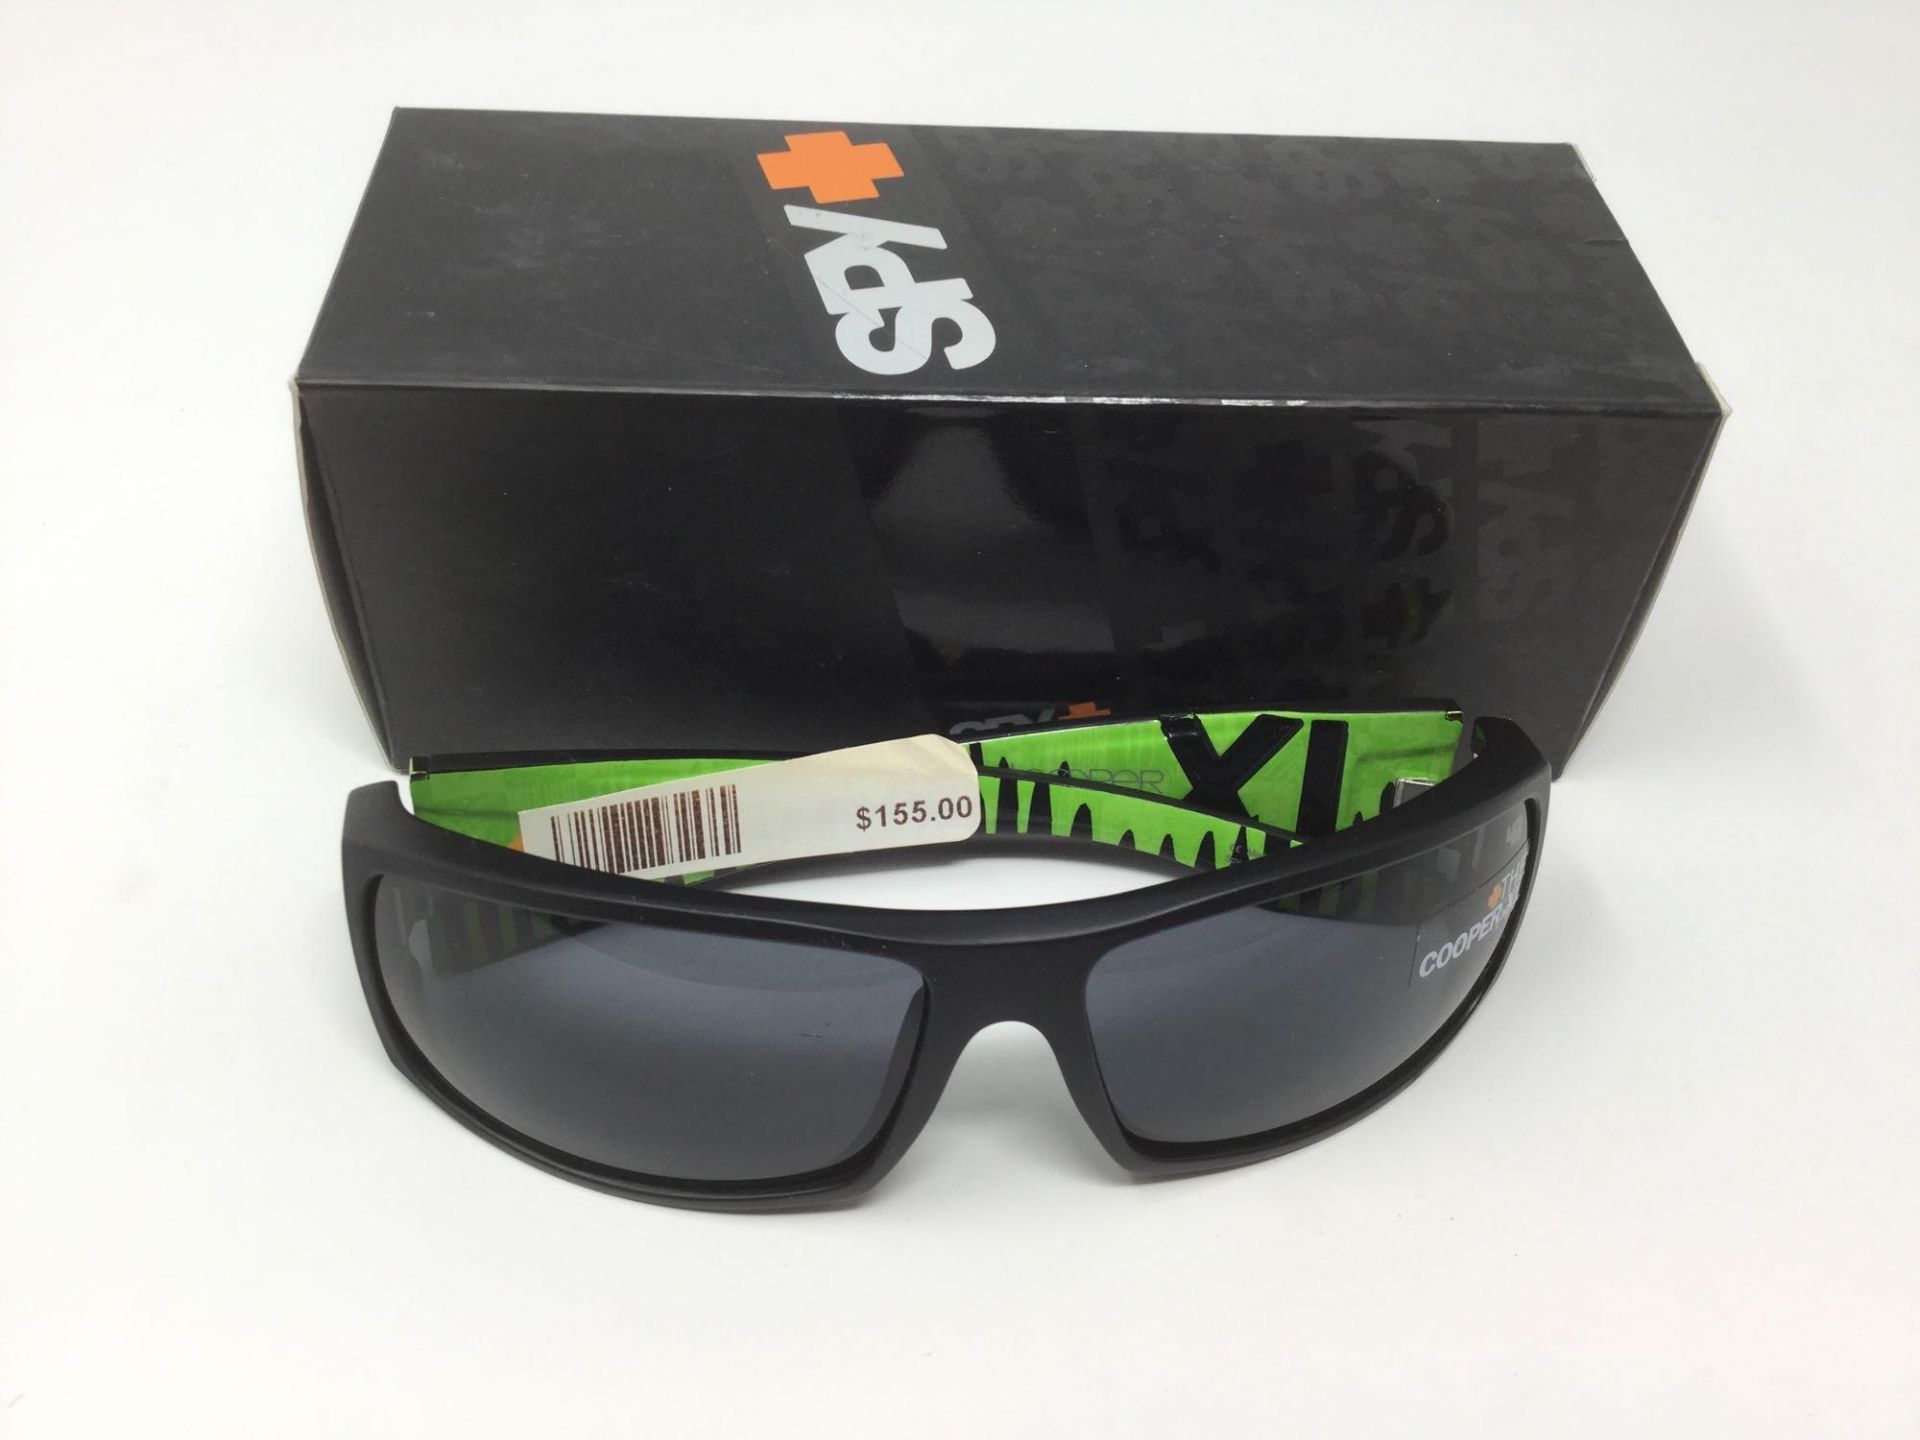 Spy Sunglasses - Retail $155.00